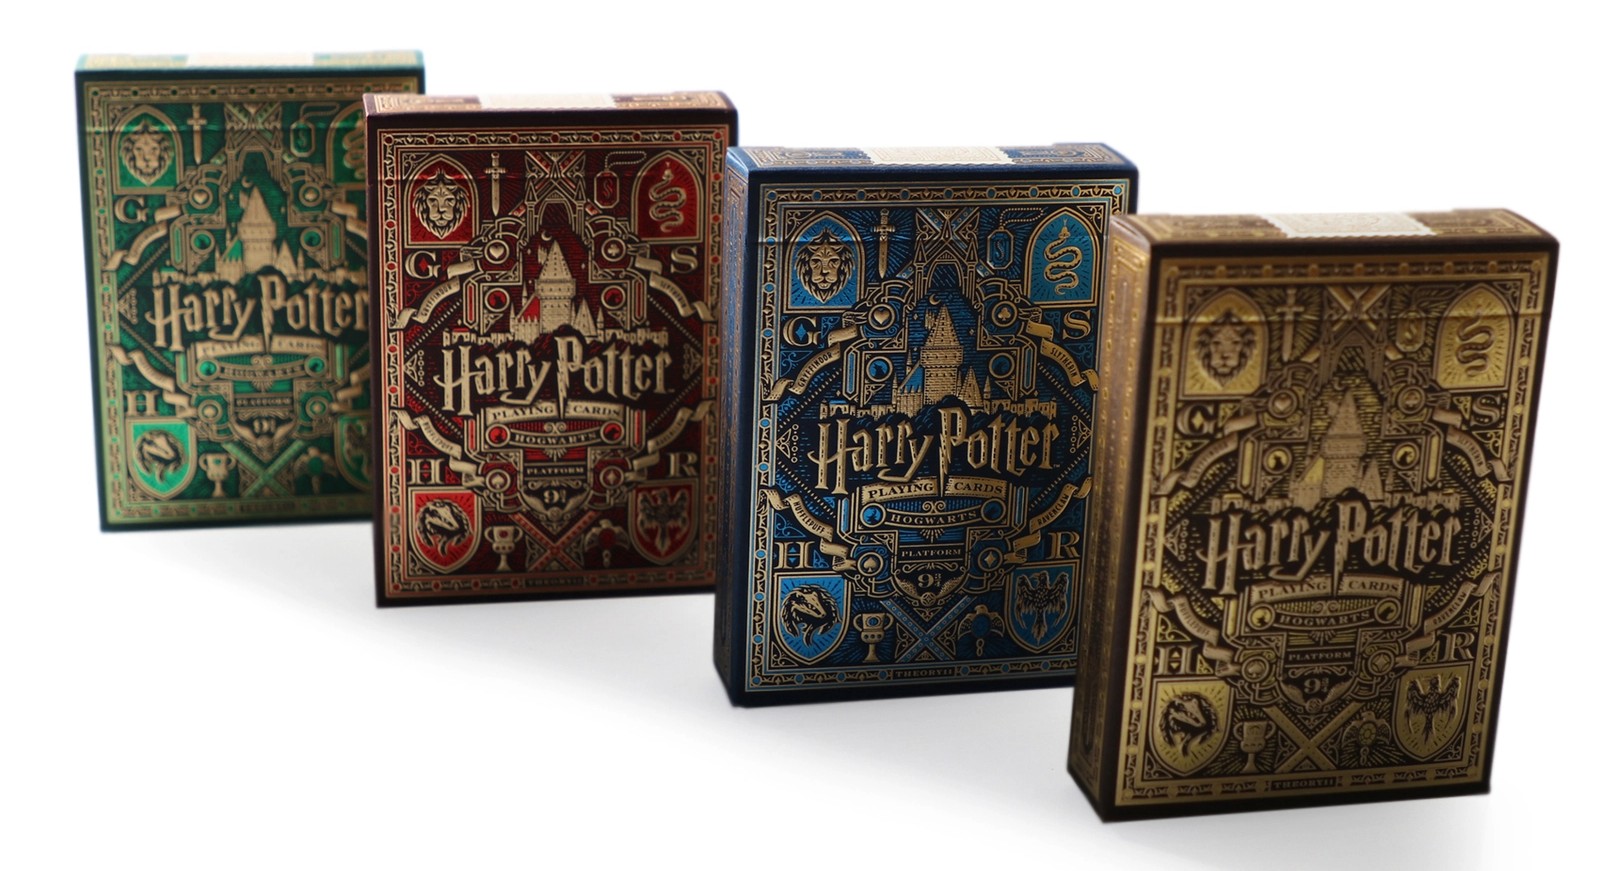 Buy Harry Potter - Poufsouffle - Cartes à Jouer Theory XI